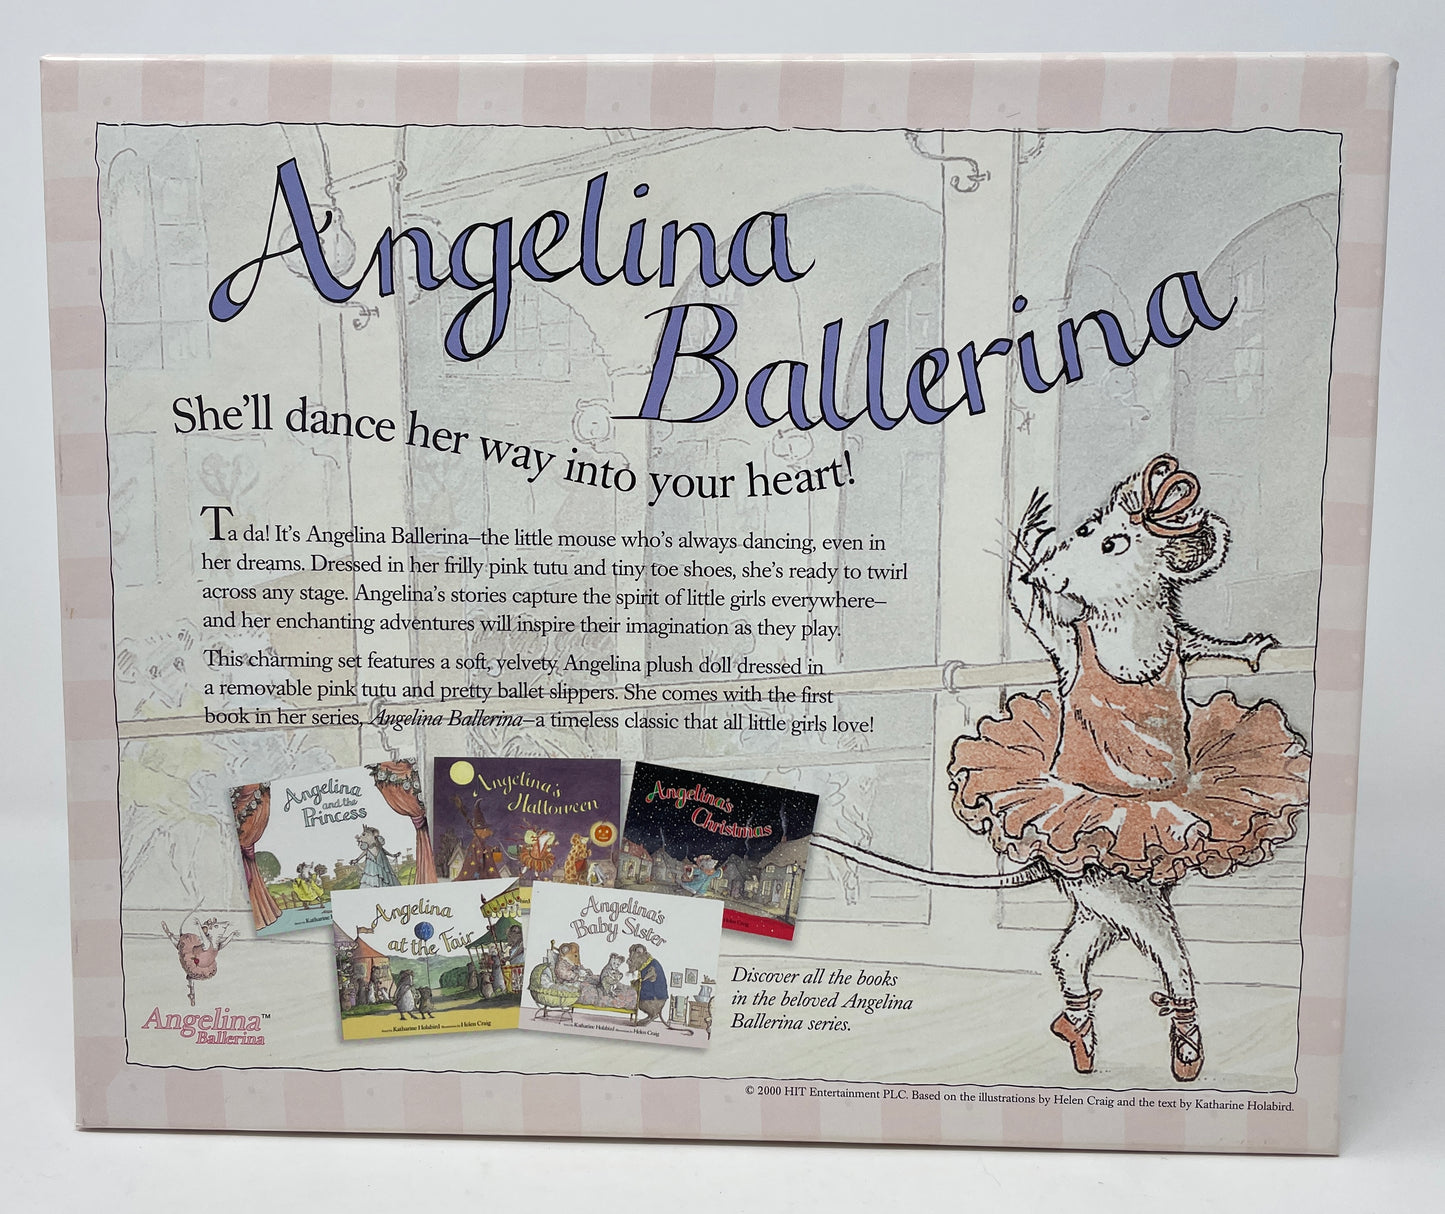 ANGELINA BALLERINA BOOK & DOLL SET - HIT ENTERTAINMENT 2000